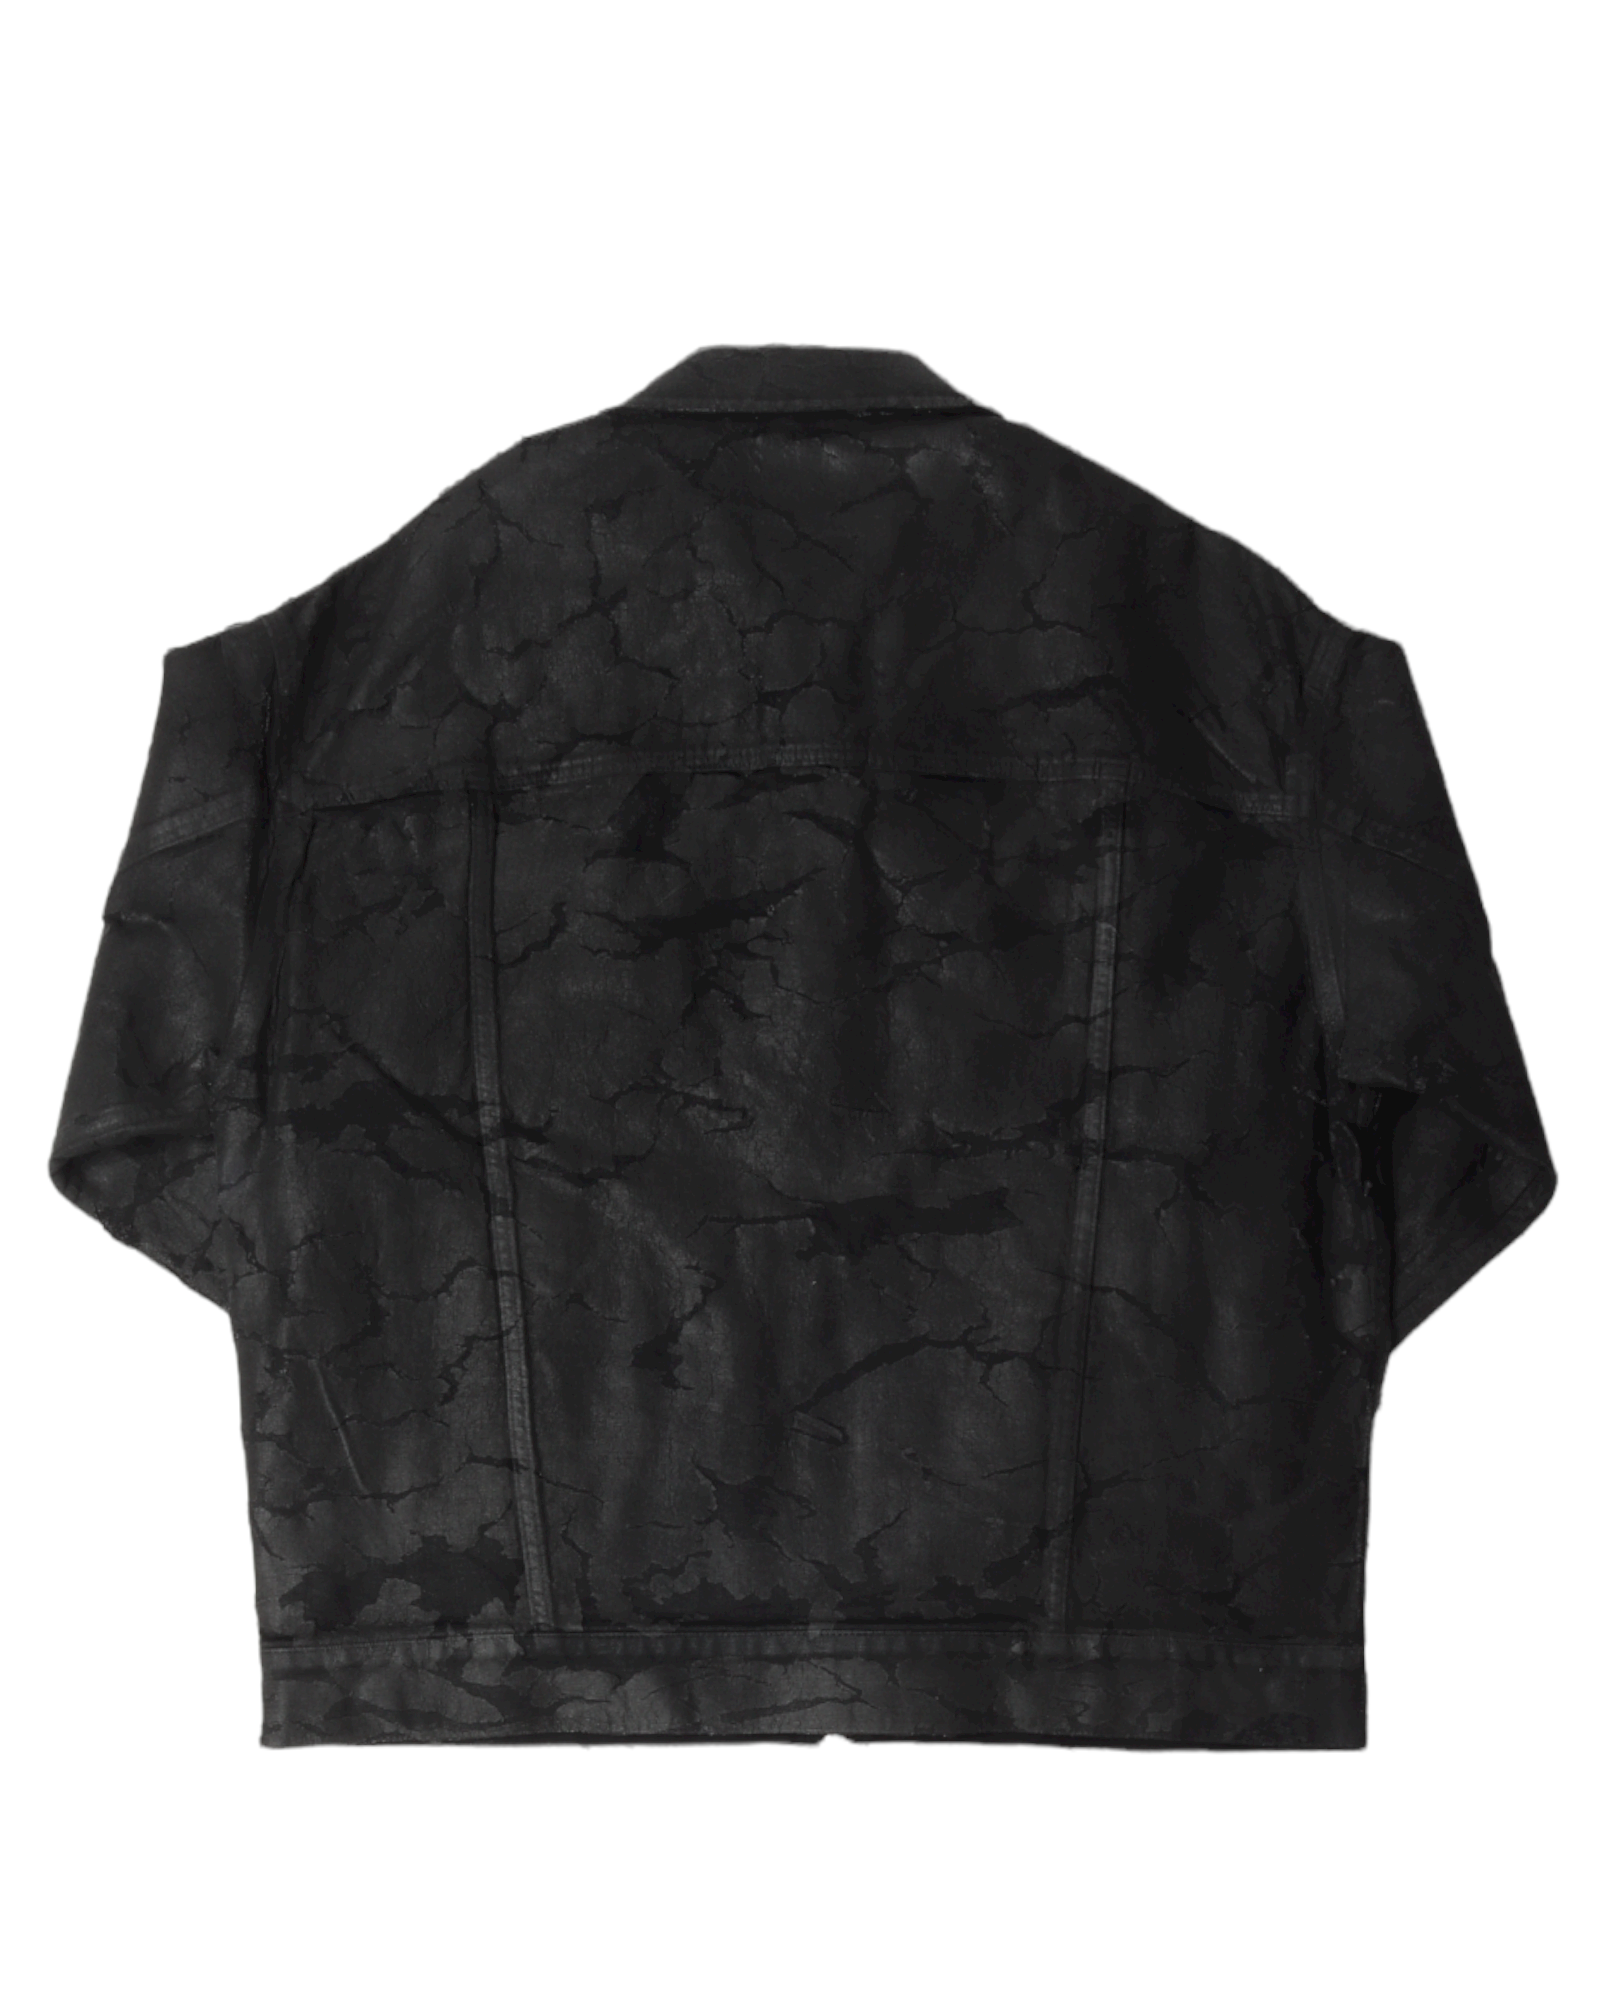 Cracked Wax Denim Jacket